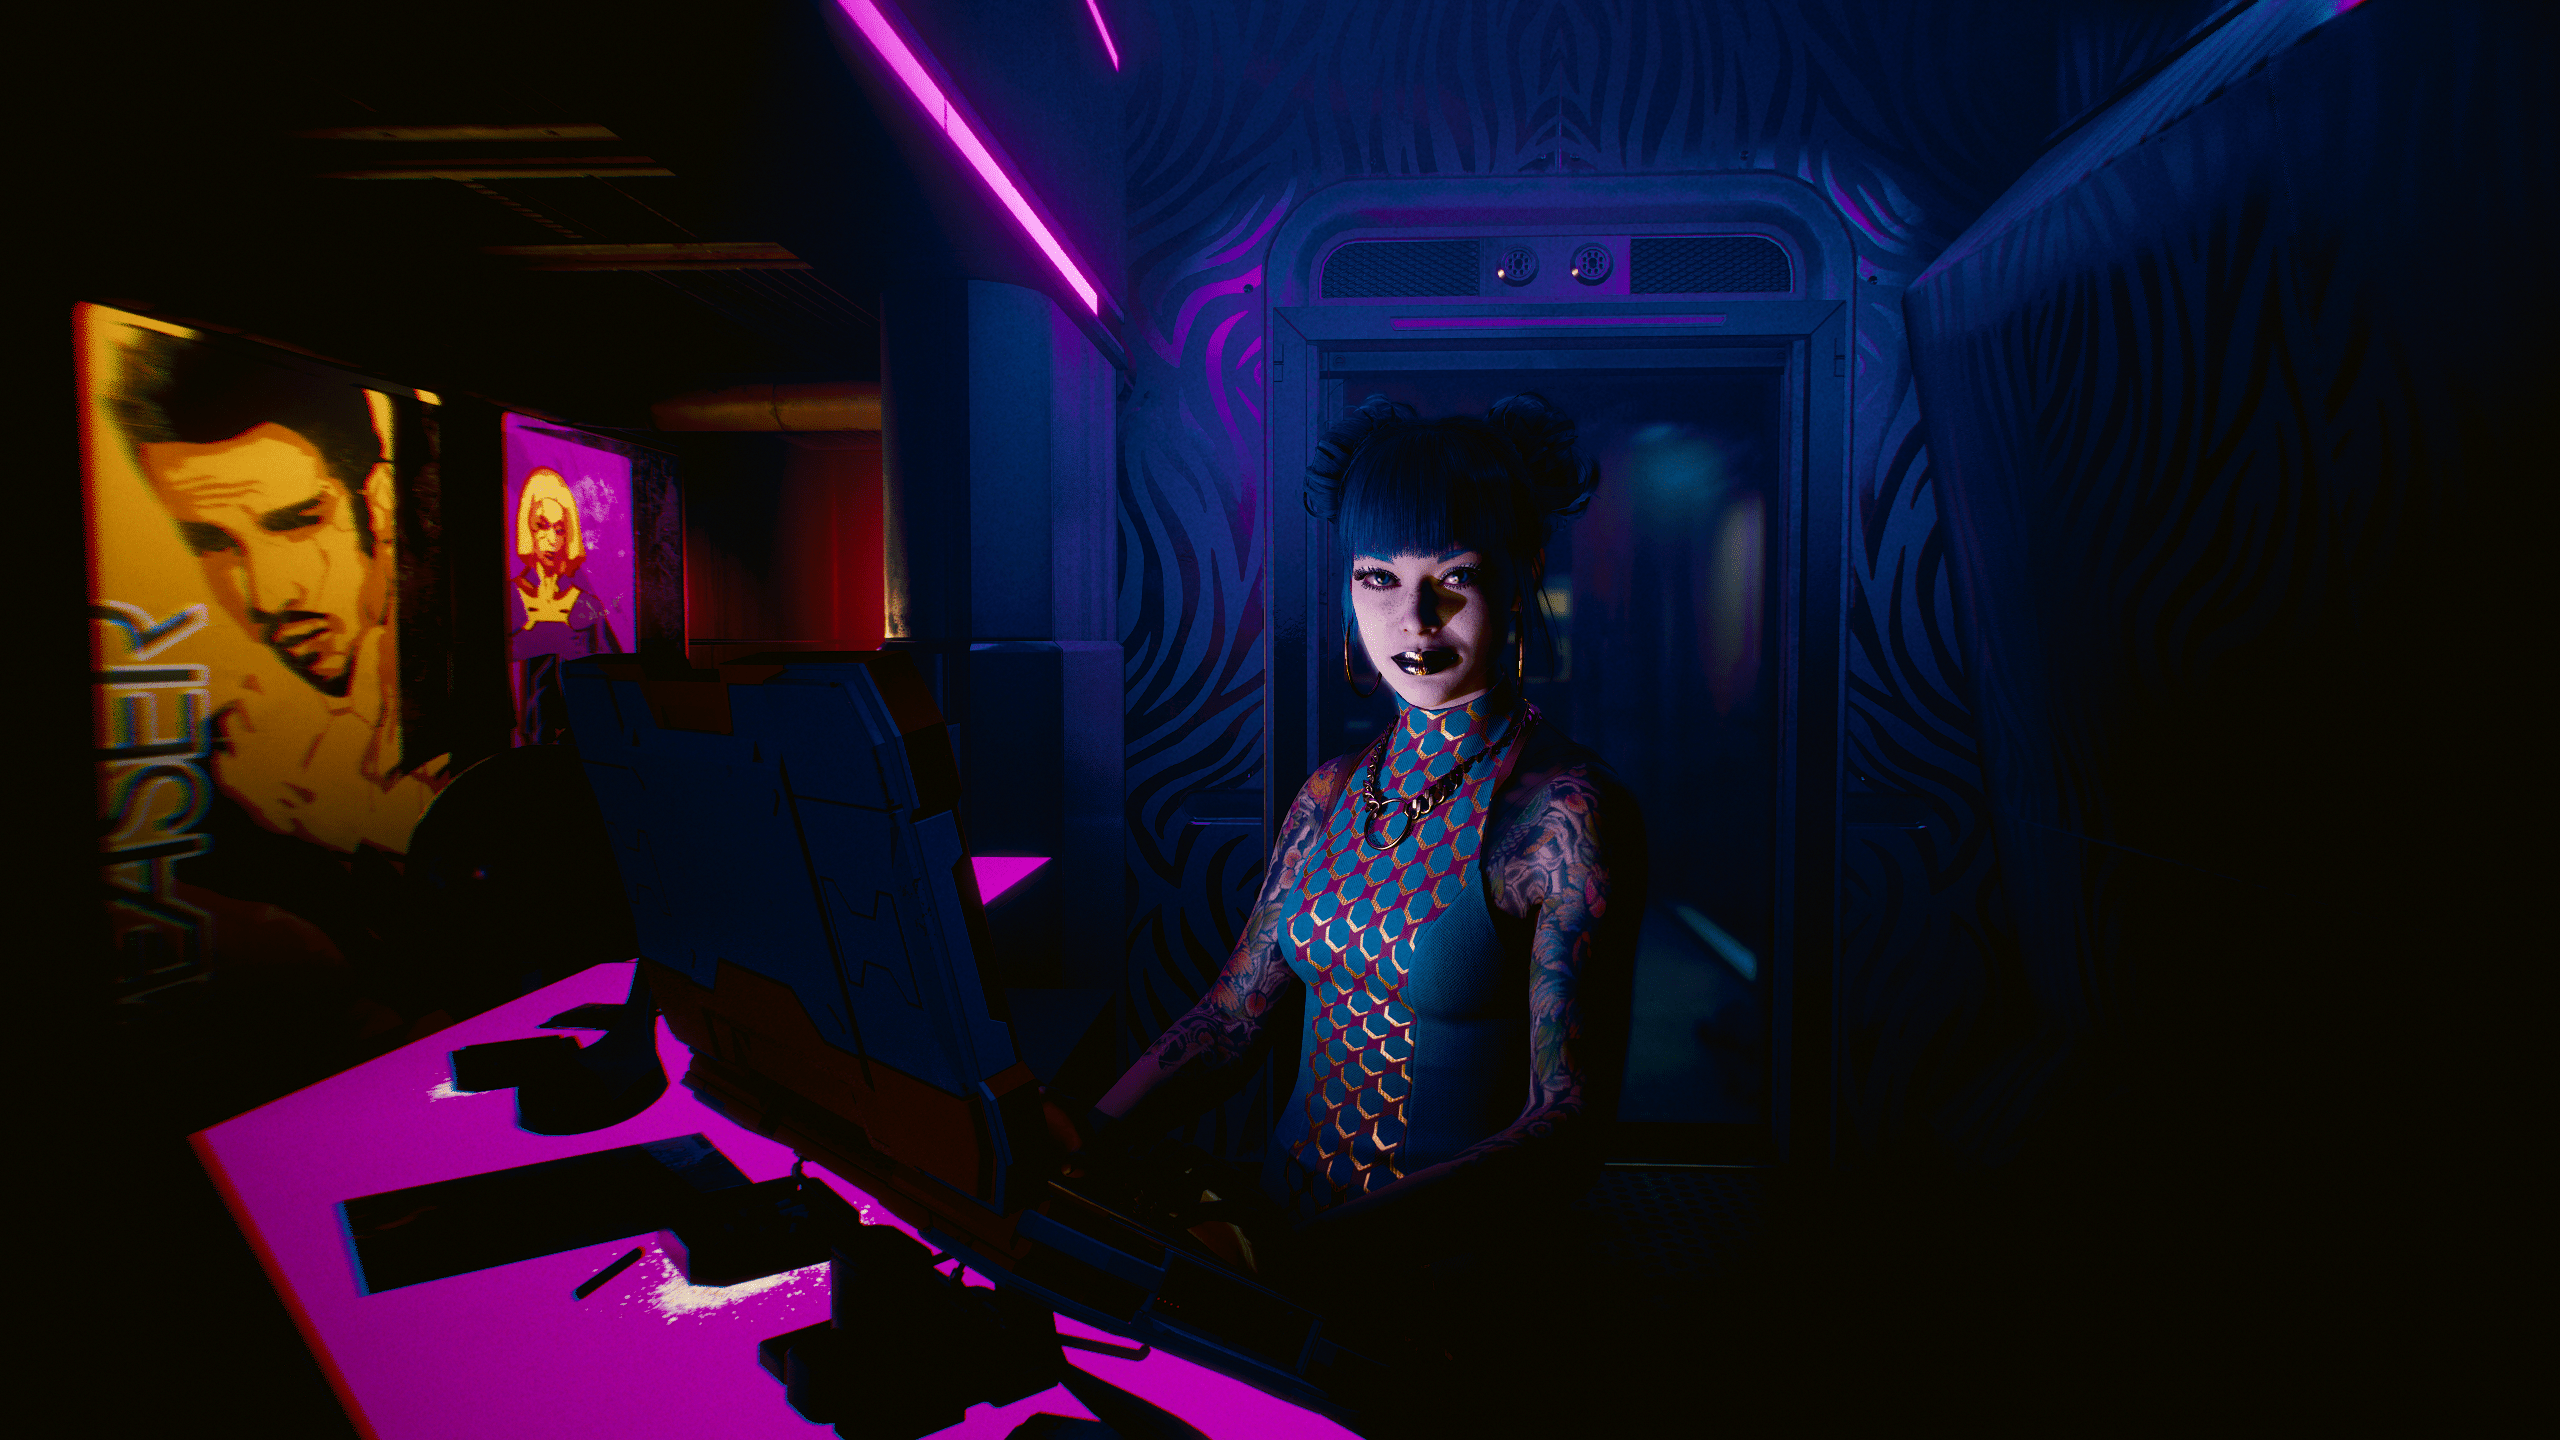 Cyberpunk 2077 character standing in a purple-lit room - Cyberpunk